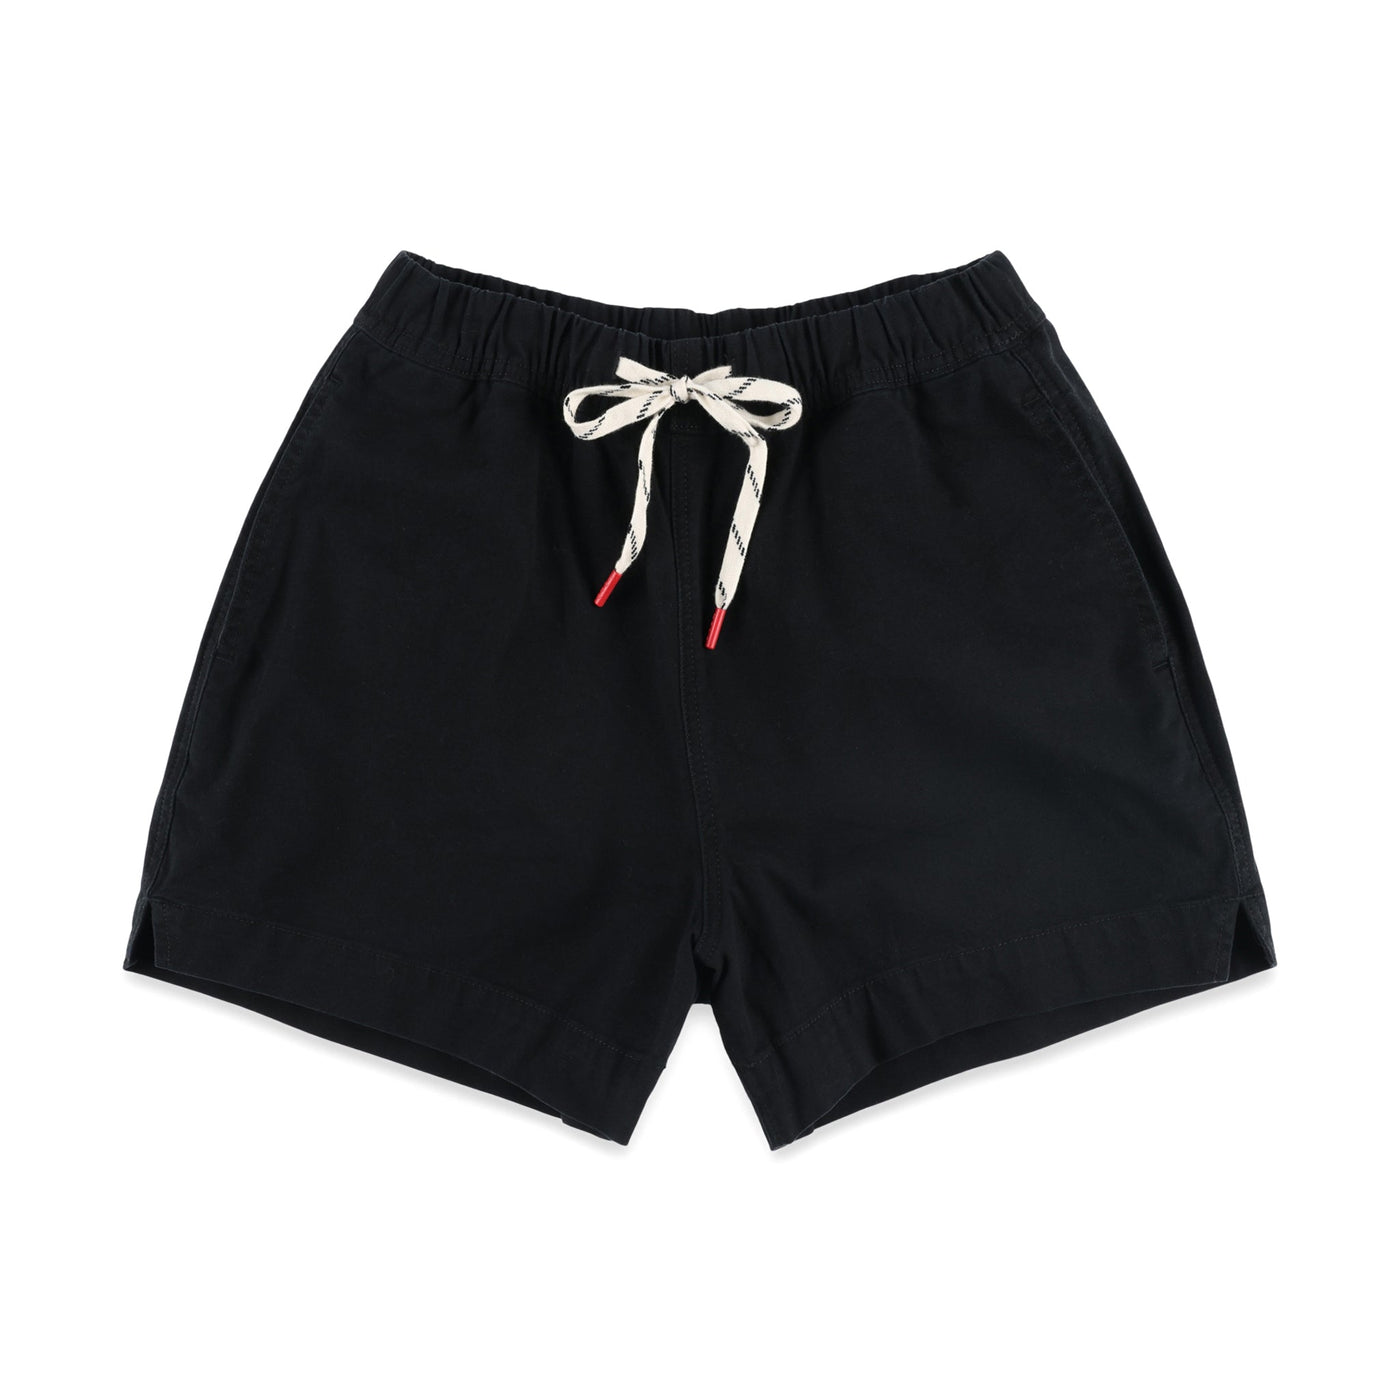 Topo Designs Women's drawstring Dirt Shorts in 100% organic cotton in "Black".